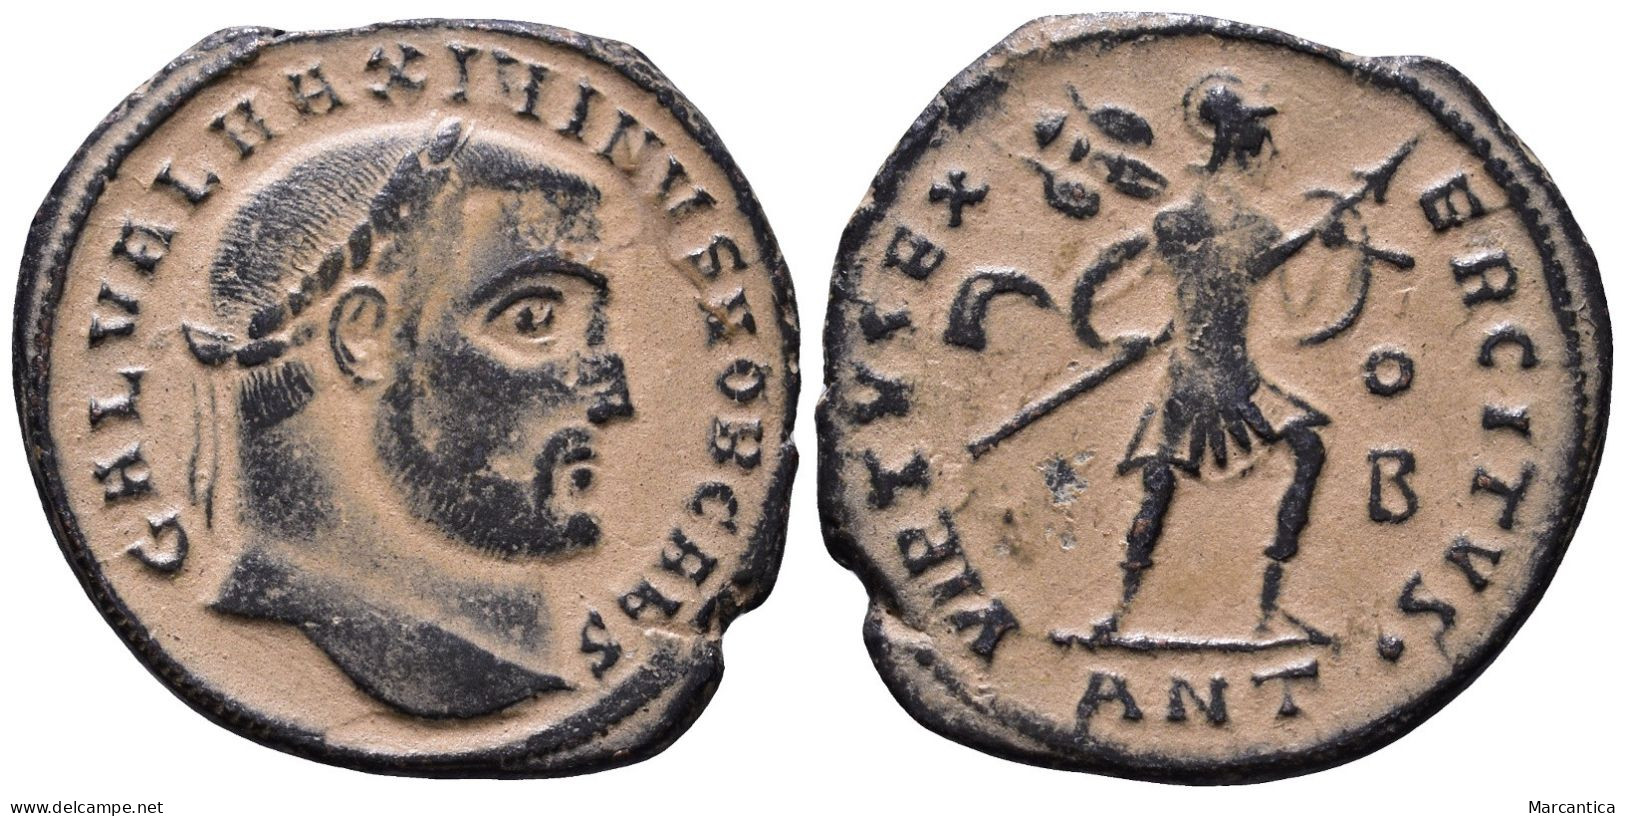 Maximinus II Daia, Caesar (305-313 AD). Antioch AE Follis (24 Mm 4,65 G) - The Christian Empire (307 AD Tot 363 AD)